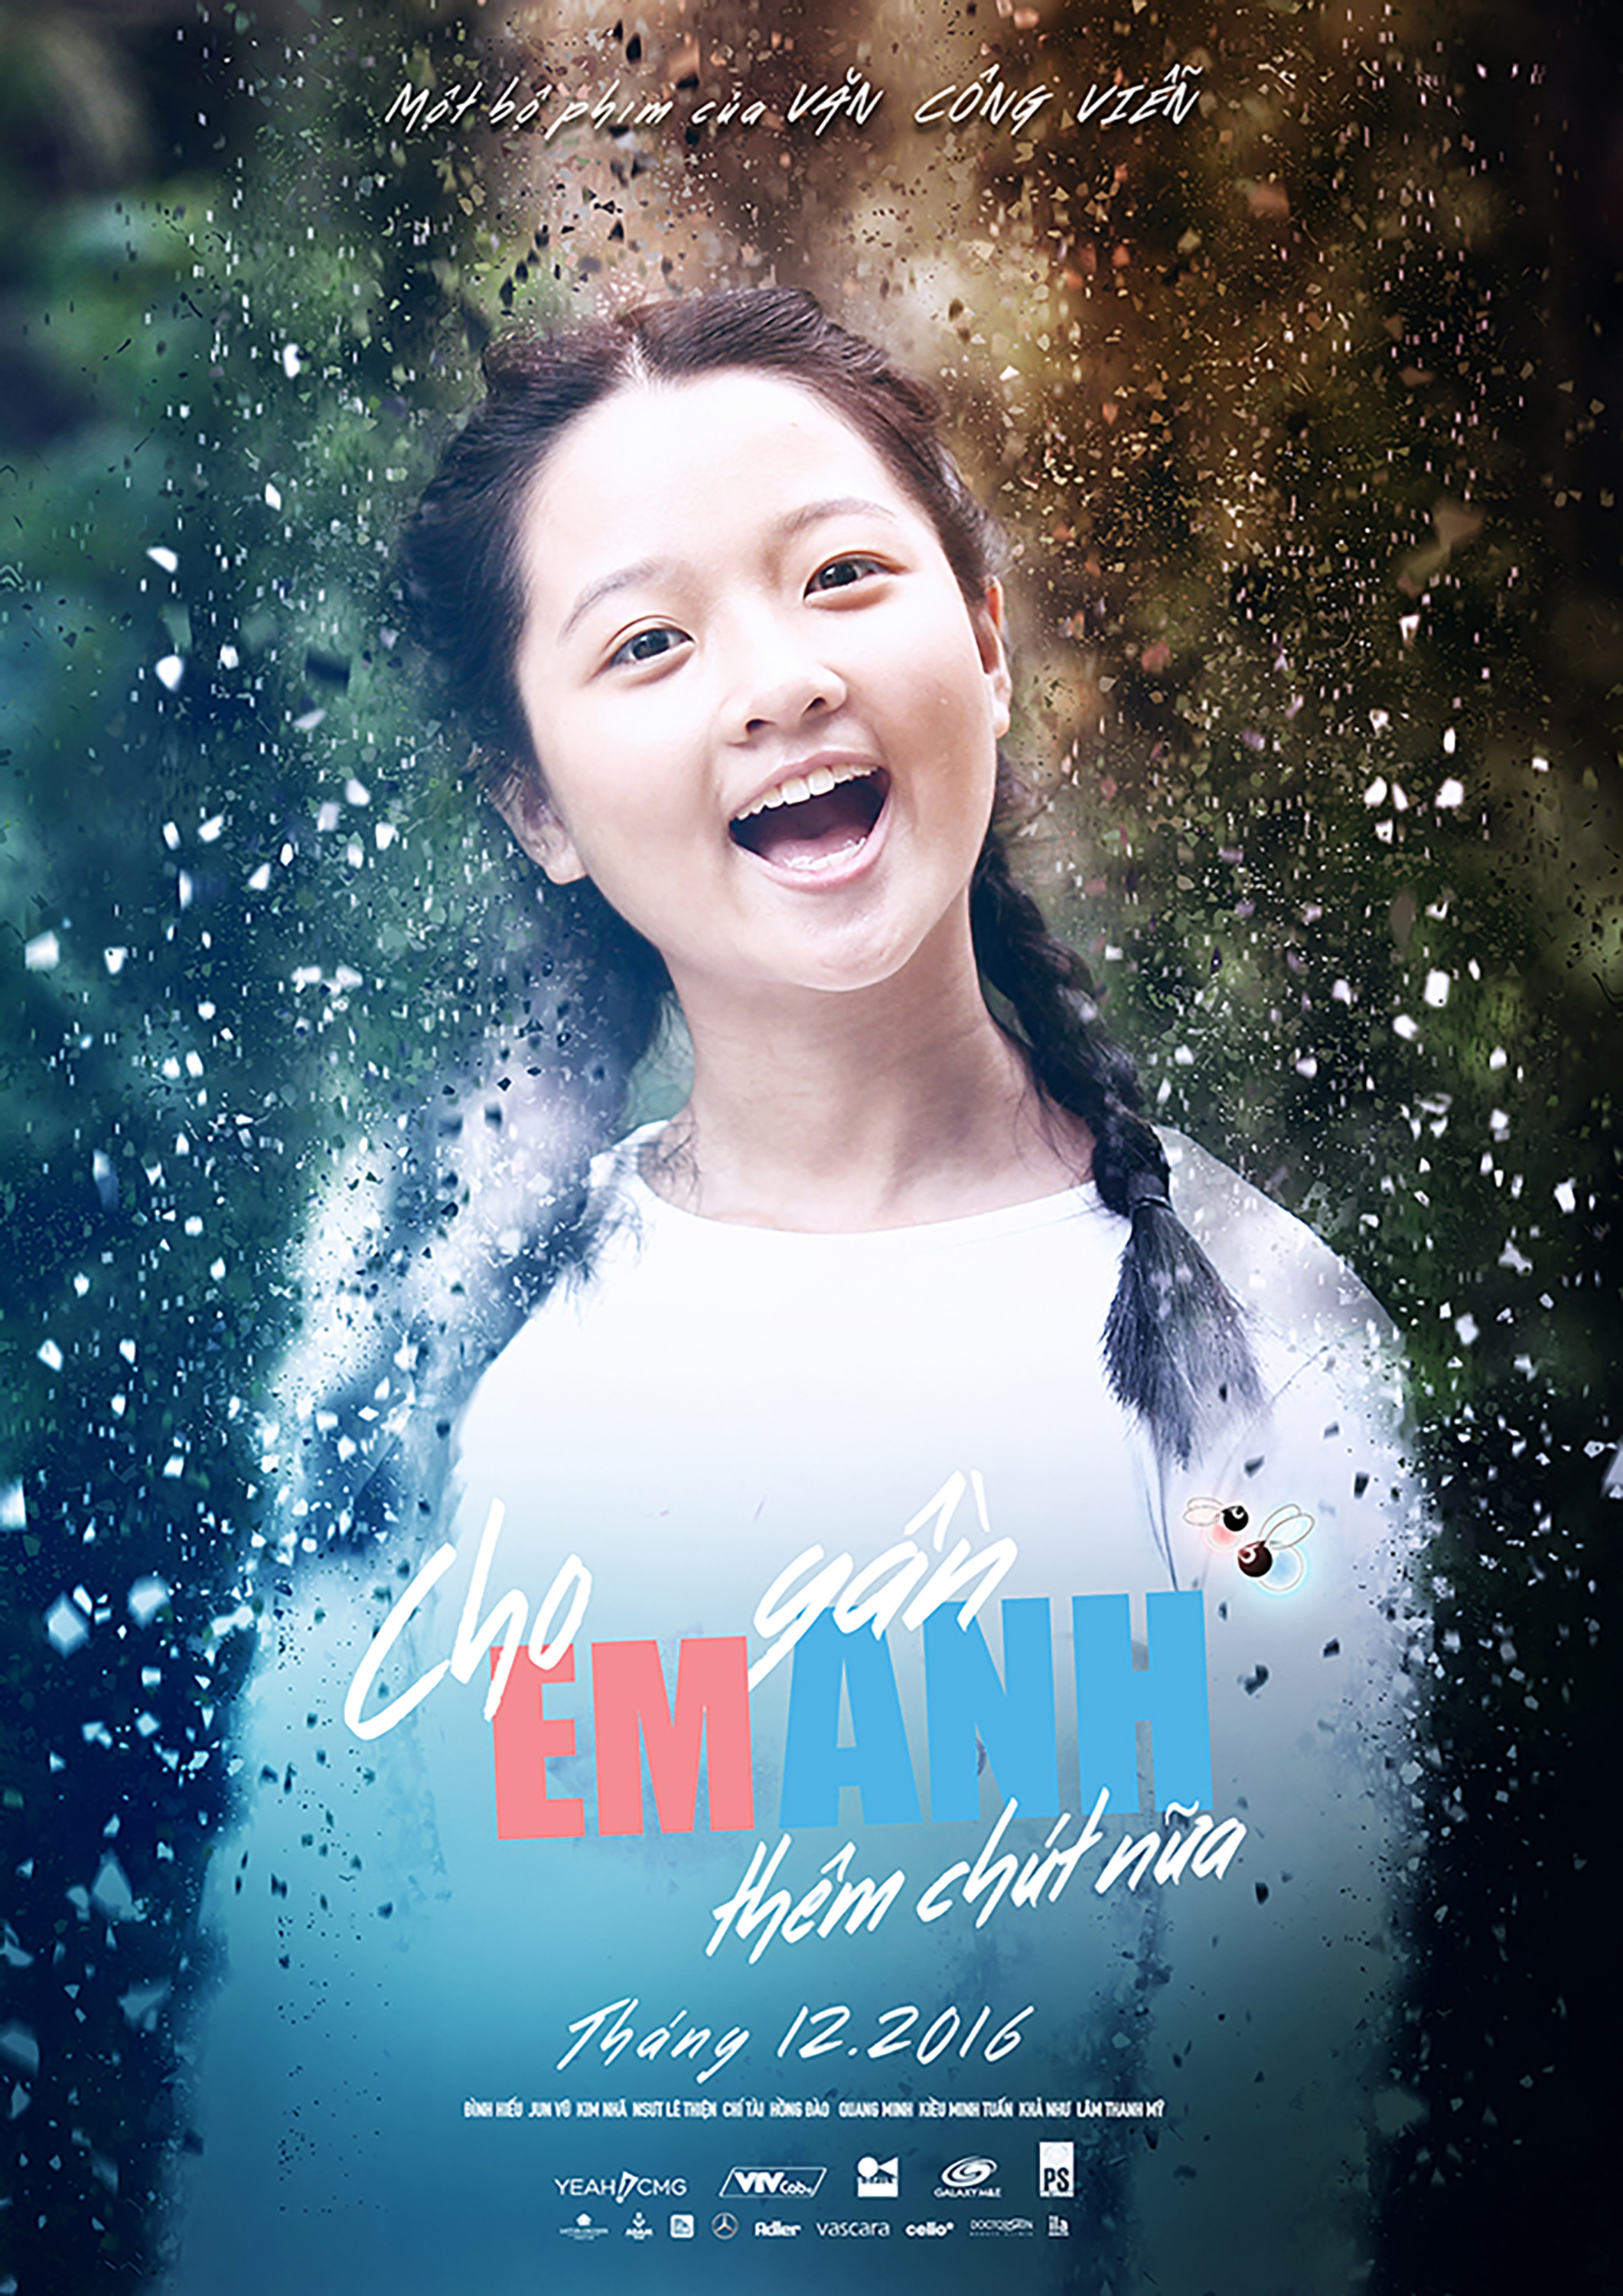 Mega Sized Movie Poster Image for Cho em gần anh thêm chút nữa (#14 of 14)